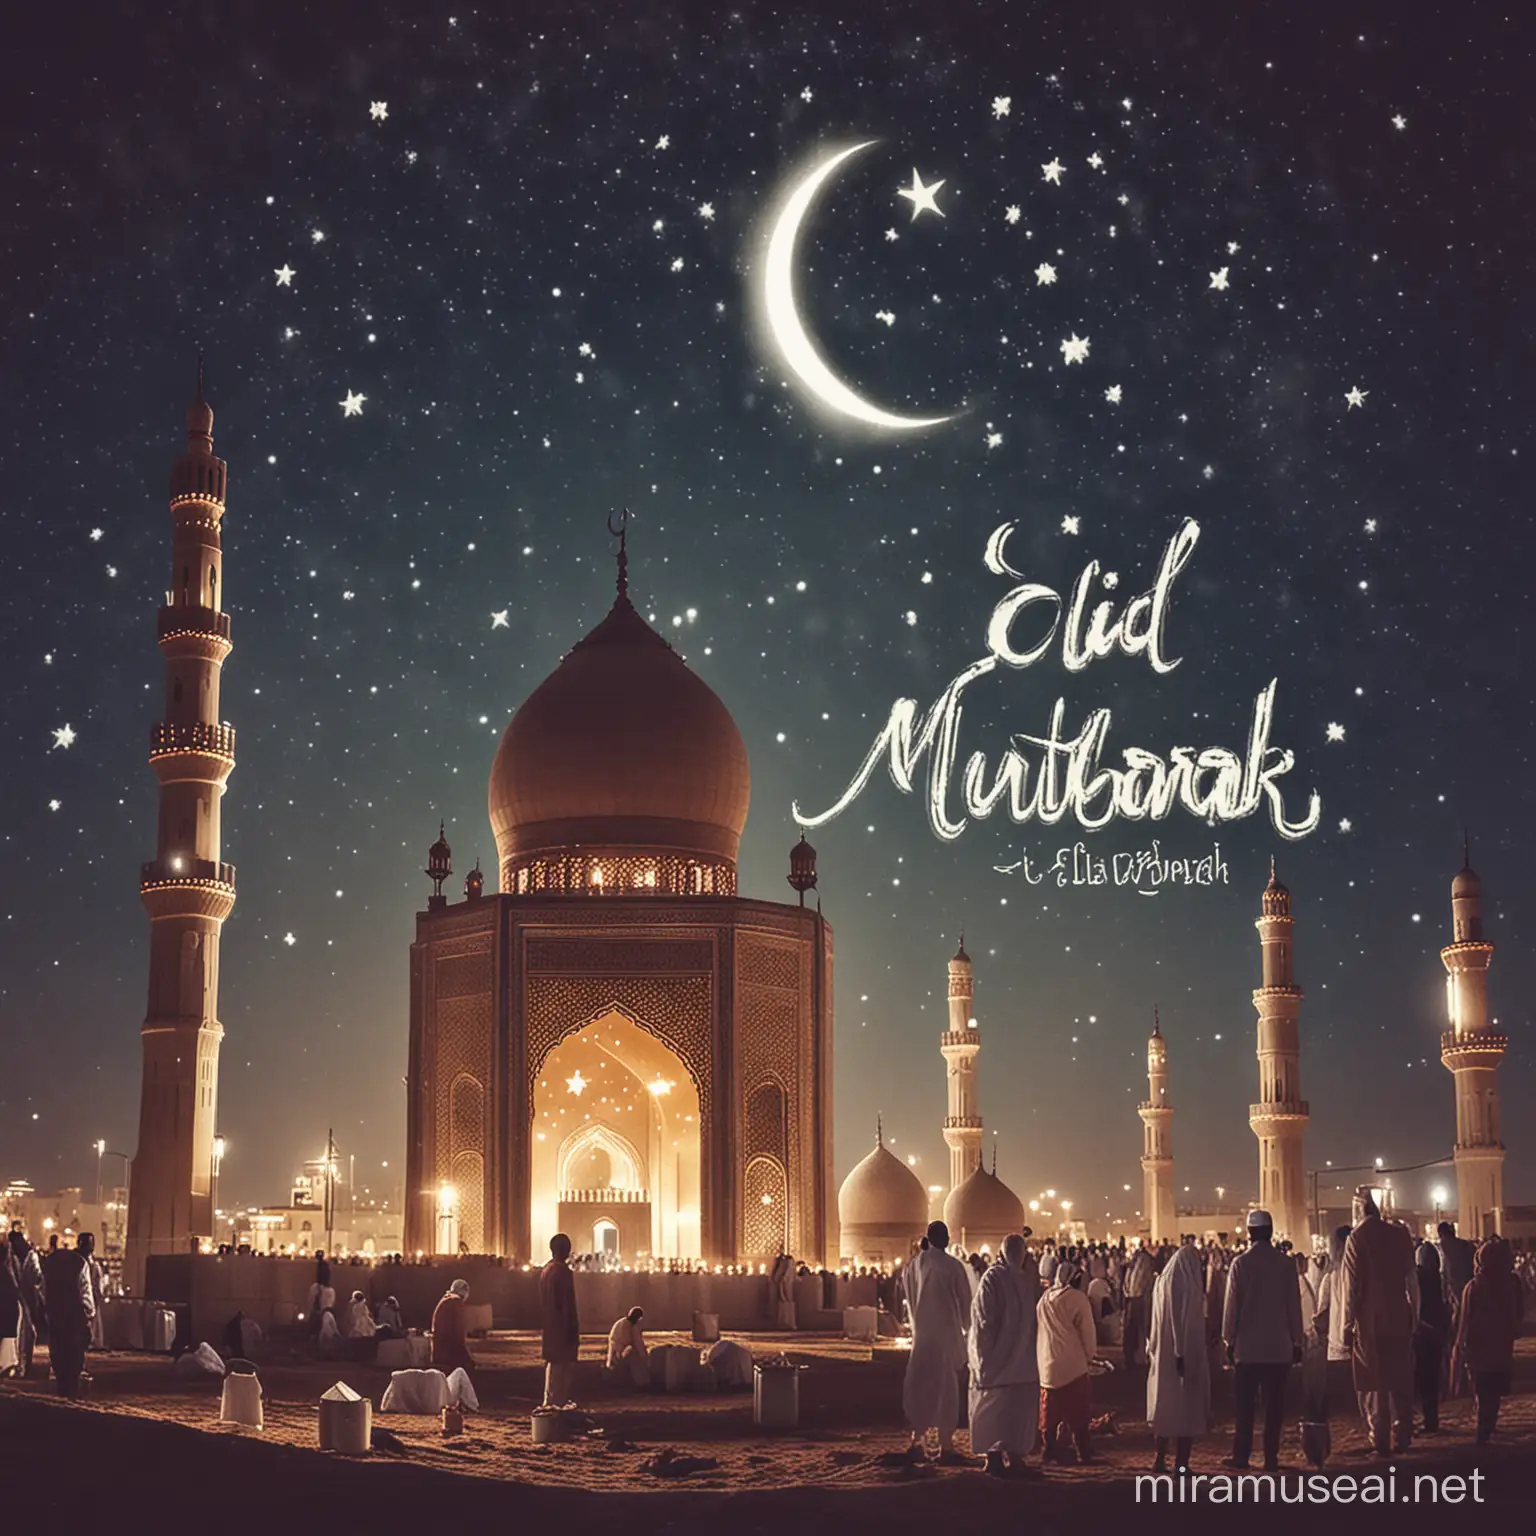 Muslim Family Celebrating Eid Mubarak with Traditional Festive Feast